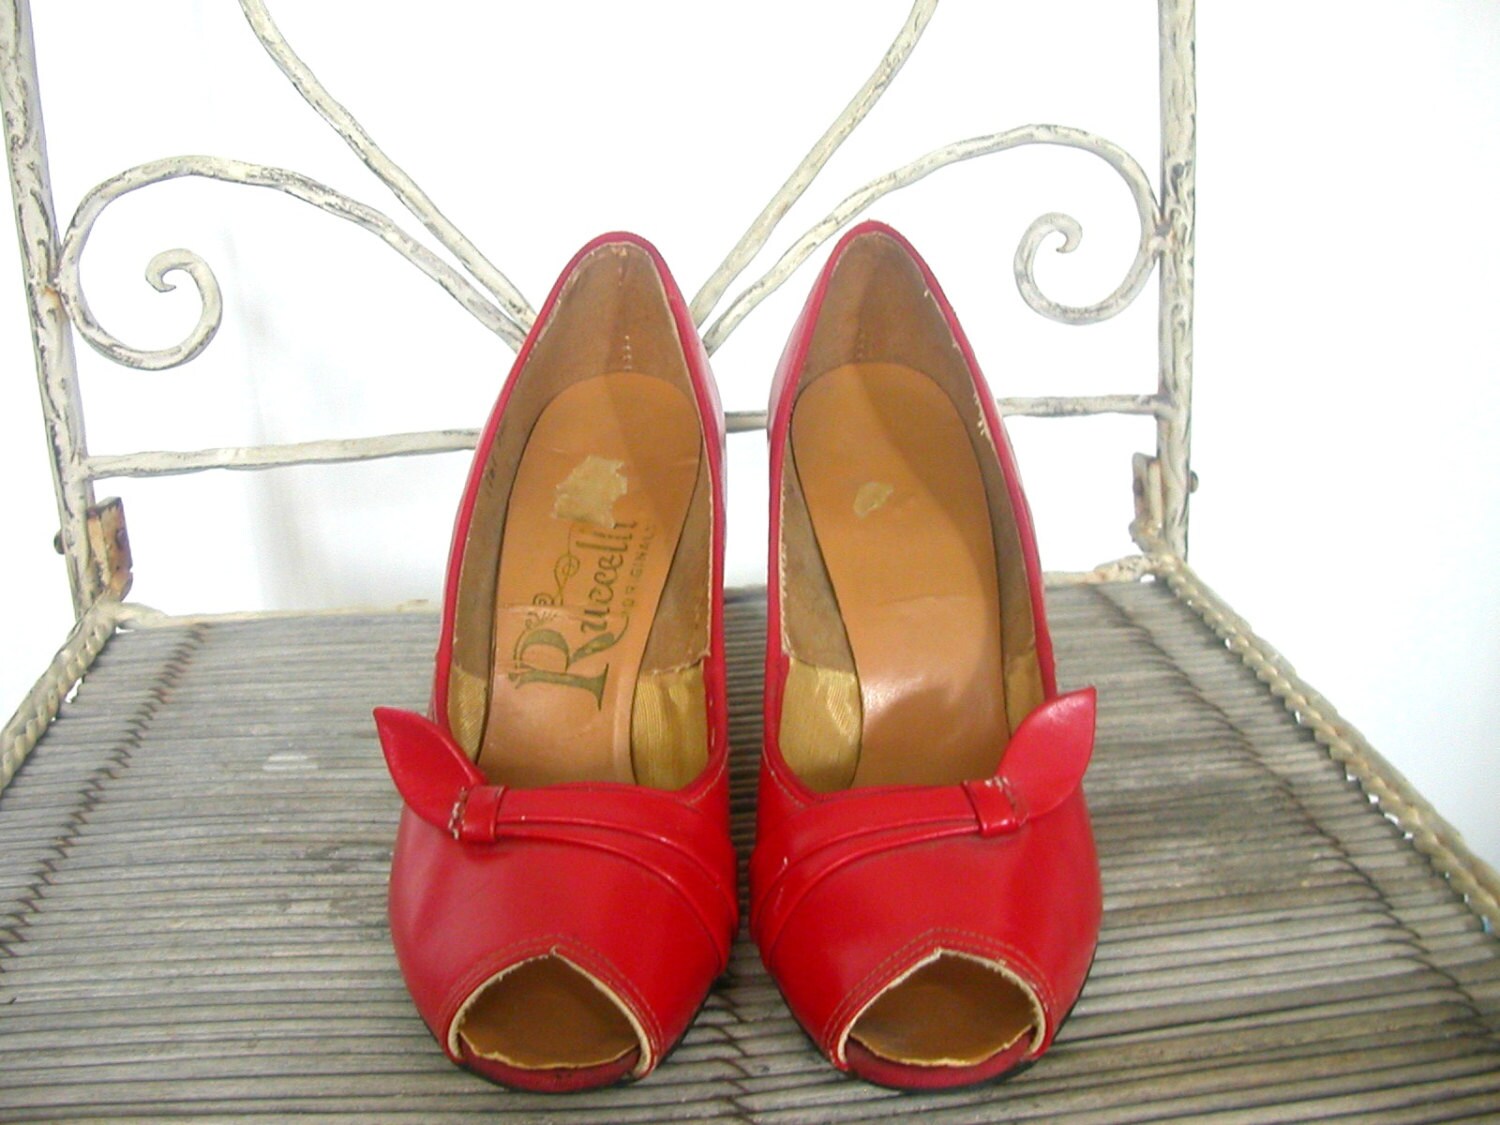 pin up shoes peep toe shoes stilettos Schoenen damesschoenen Pumps 5.5 Ruccelli red high heels 50s Pumps red pumps 